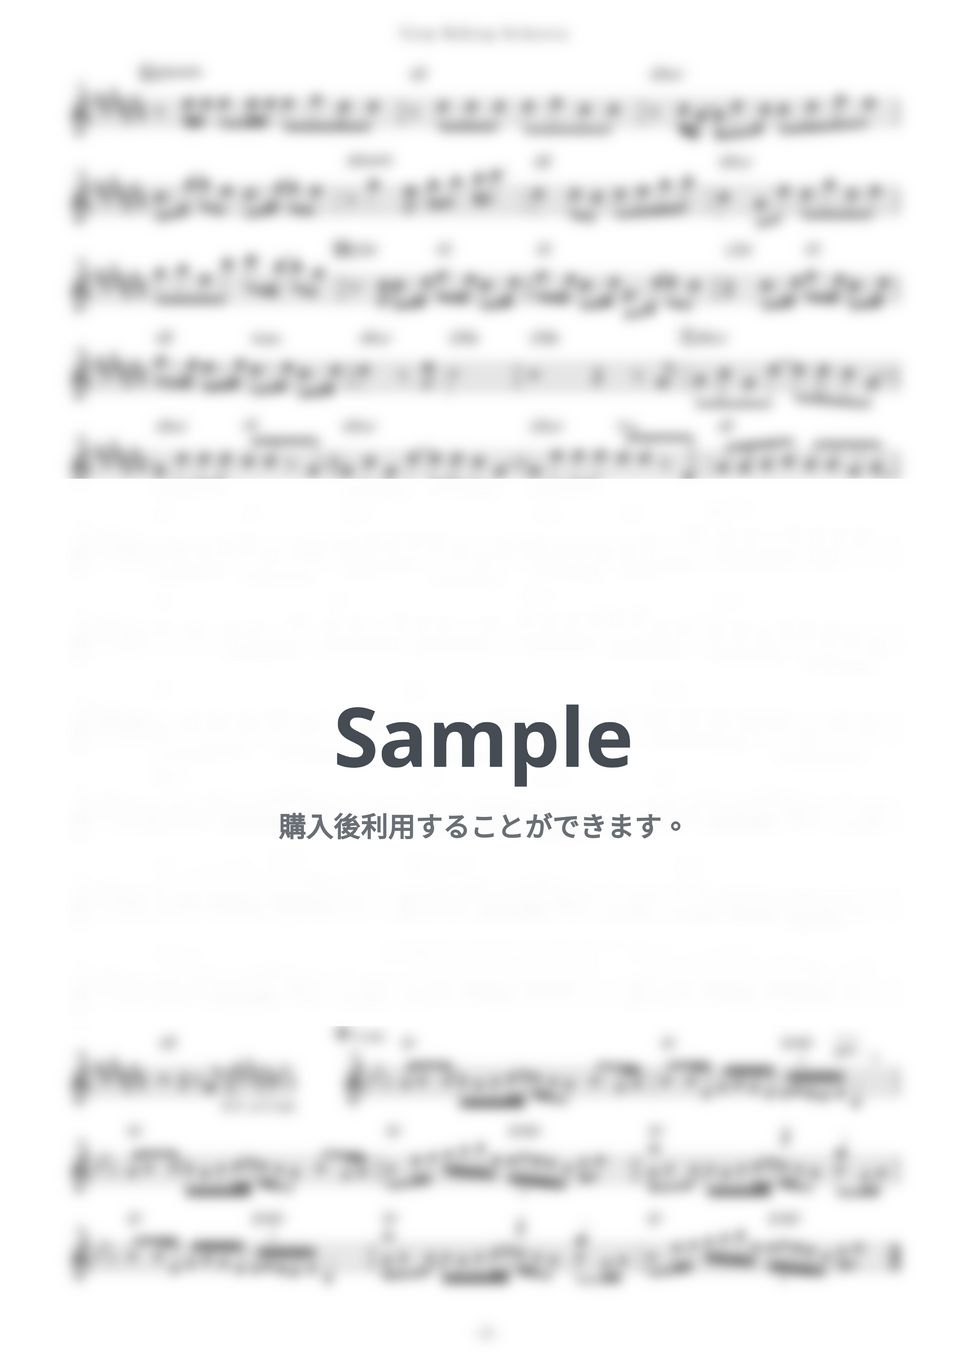 BUMP OF CHICKEN - Sleep Walking Orchestra (『ダンジョン飯』 / in C) by muta-sax